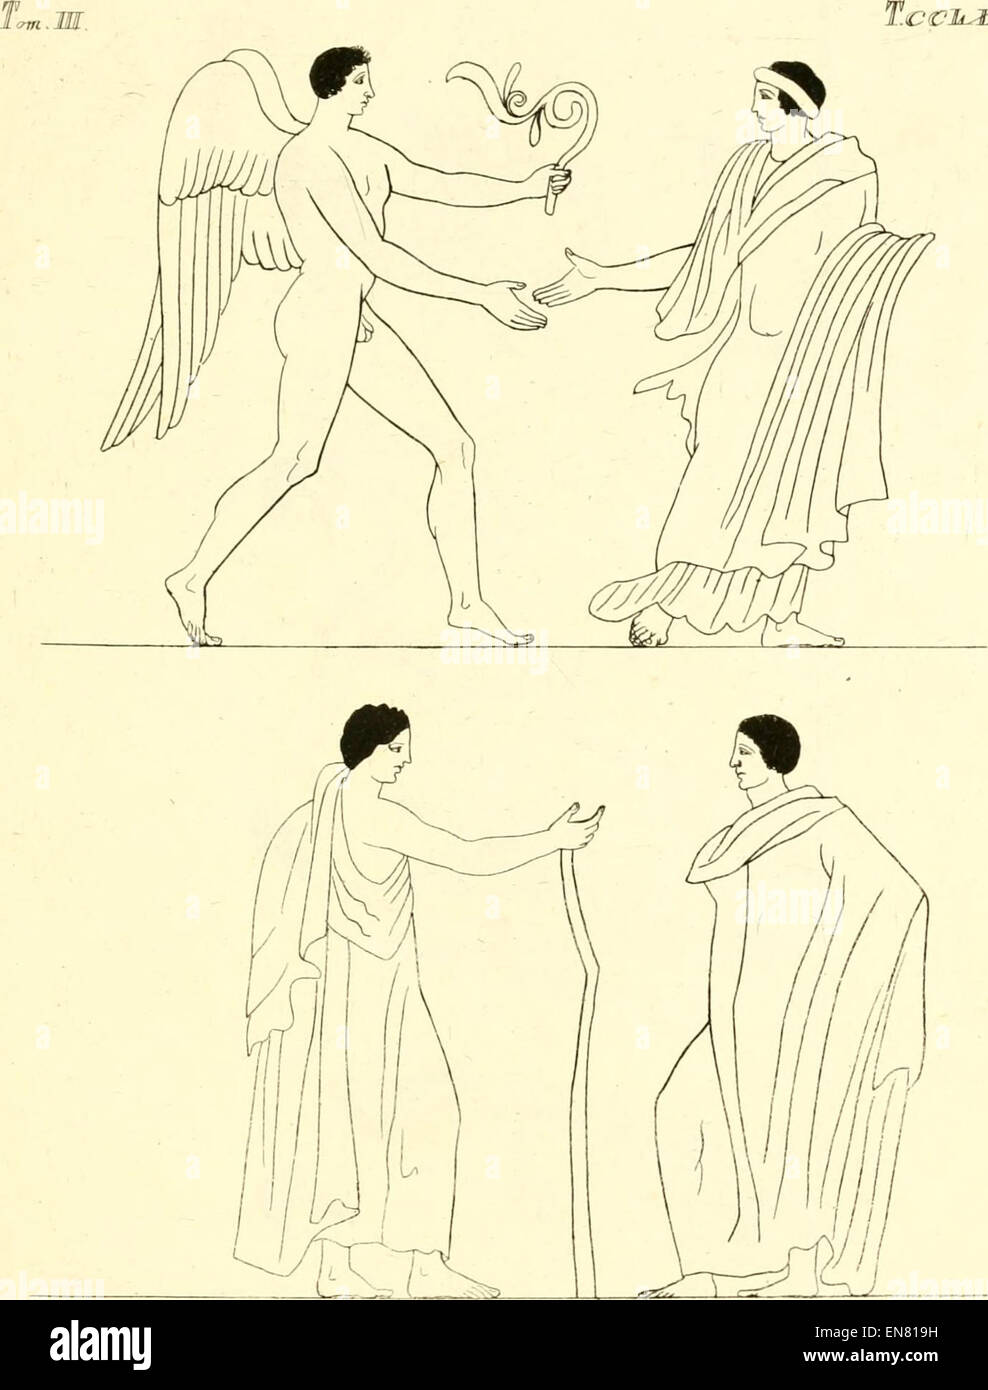 INGHIRAMI(1835) Pitture di vasi fittili Vol3 T281 (14804801243) Banque D'Images